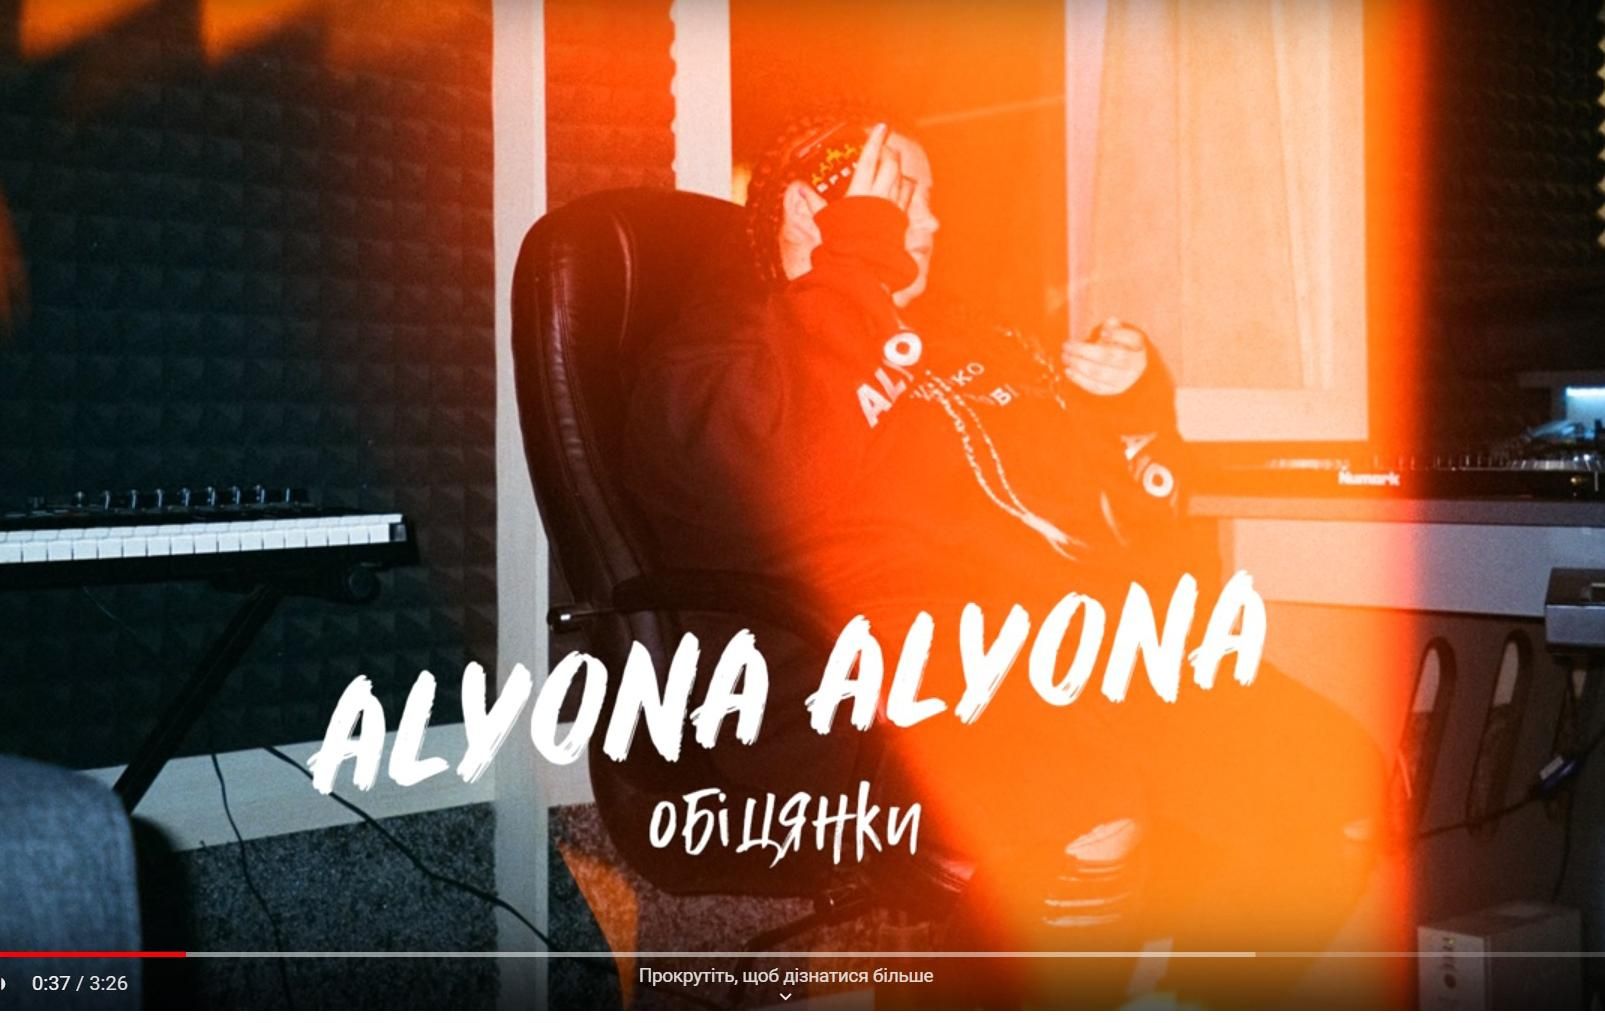 Певица Alyona Alyona записала песню после скандала с форумом Порошенко